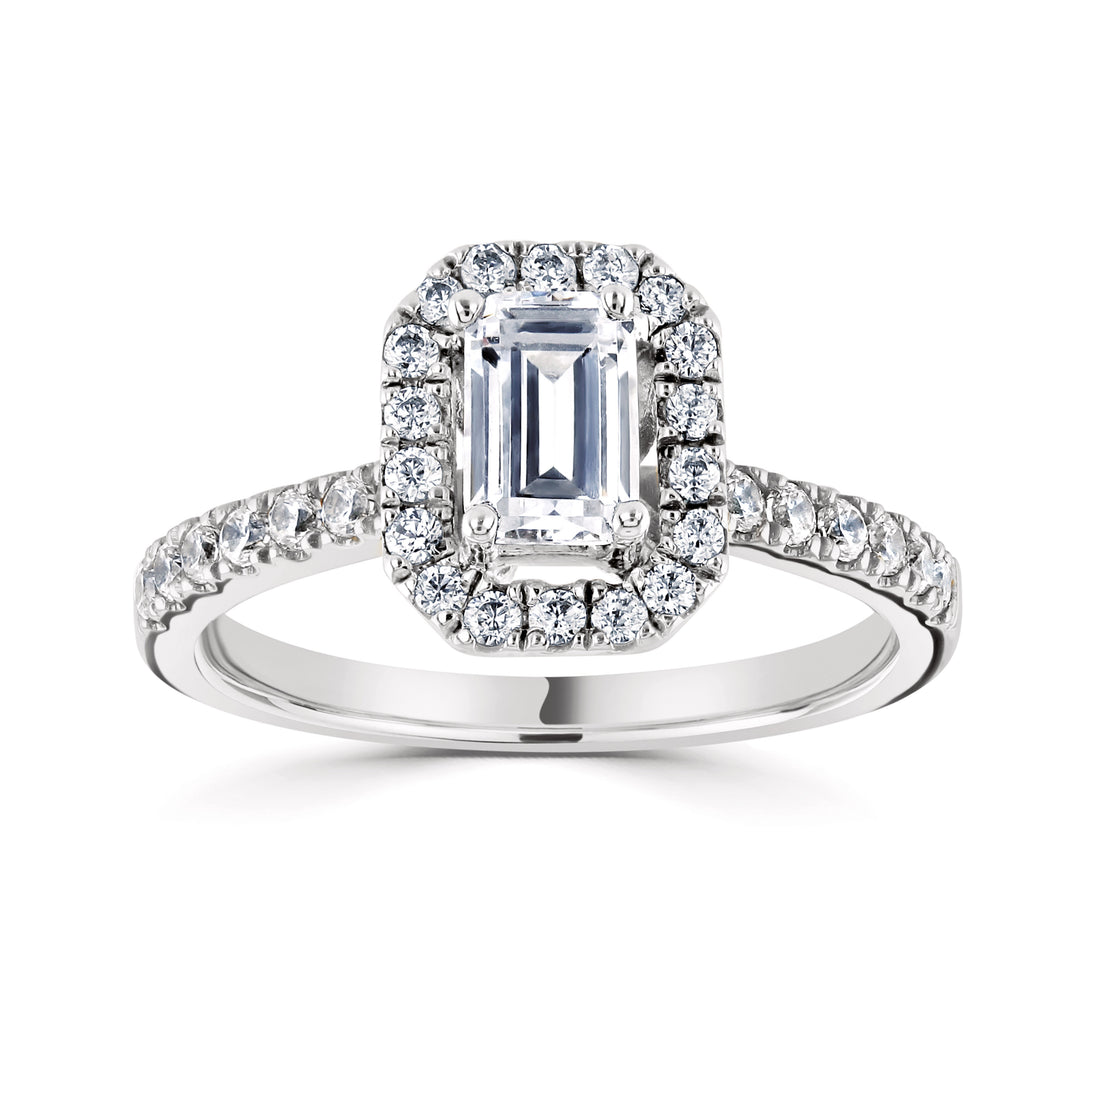 18CT White Gold Emerald Cut Diamond Halo Ring with Diamond Shoulders - Robert Anthony Jewellers, Edinburgh